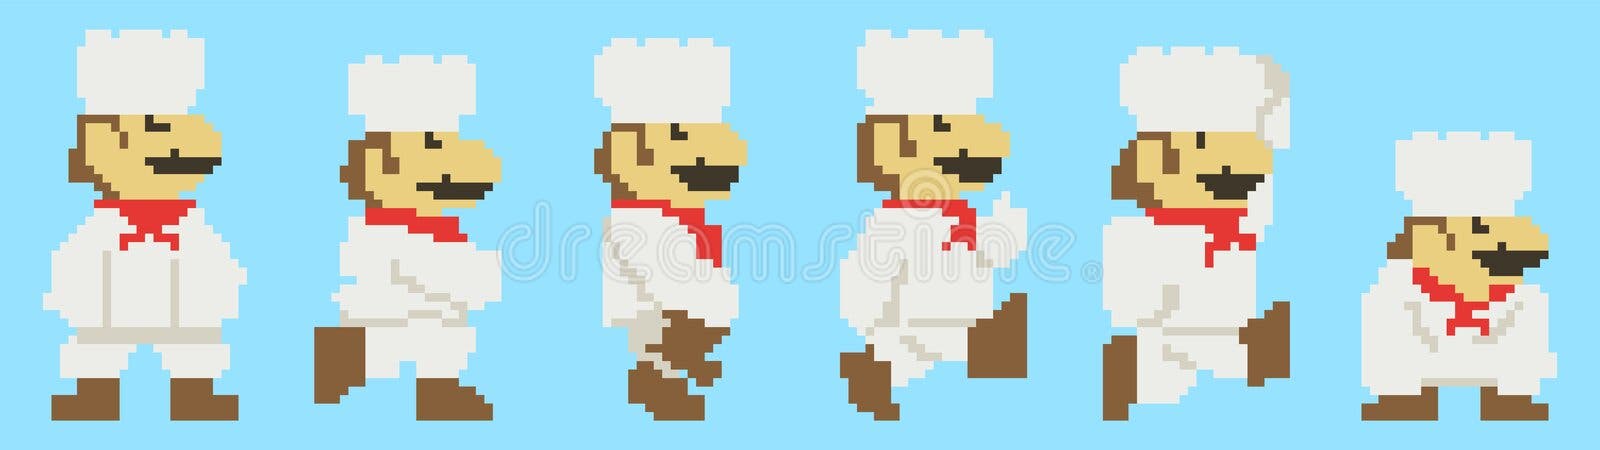 Set of Fire Mario Moves, Art of Super Mario World Classic Video Game, Pixel  Design Vector Illustration Editorial Photo - Illustration of nintendo,  motion: 213002321